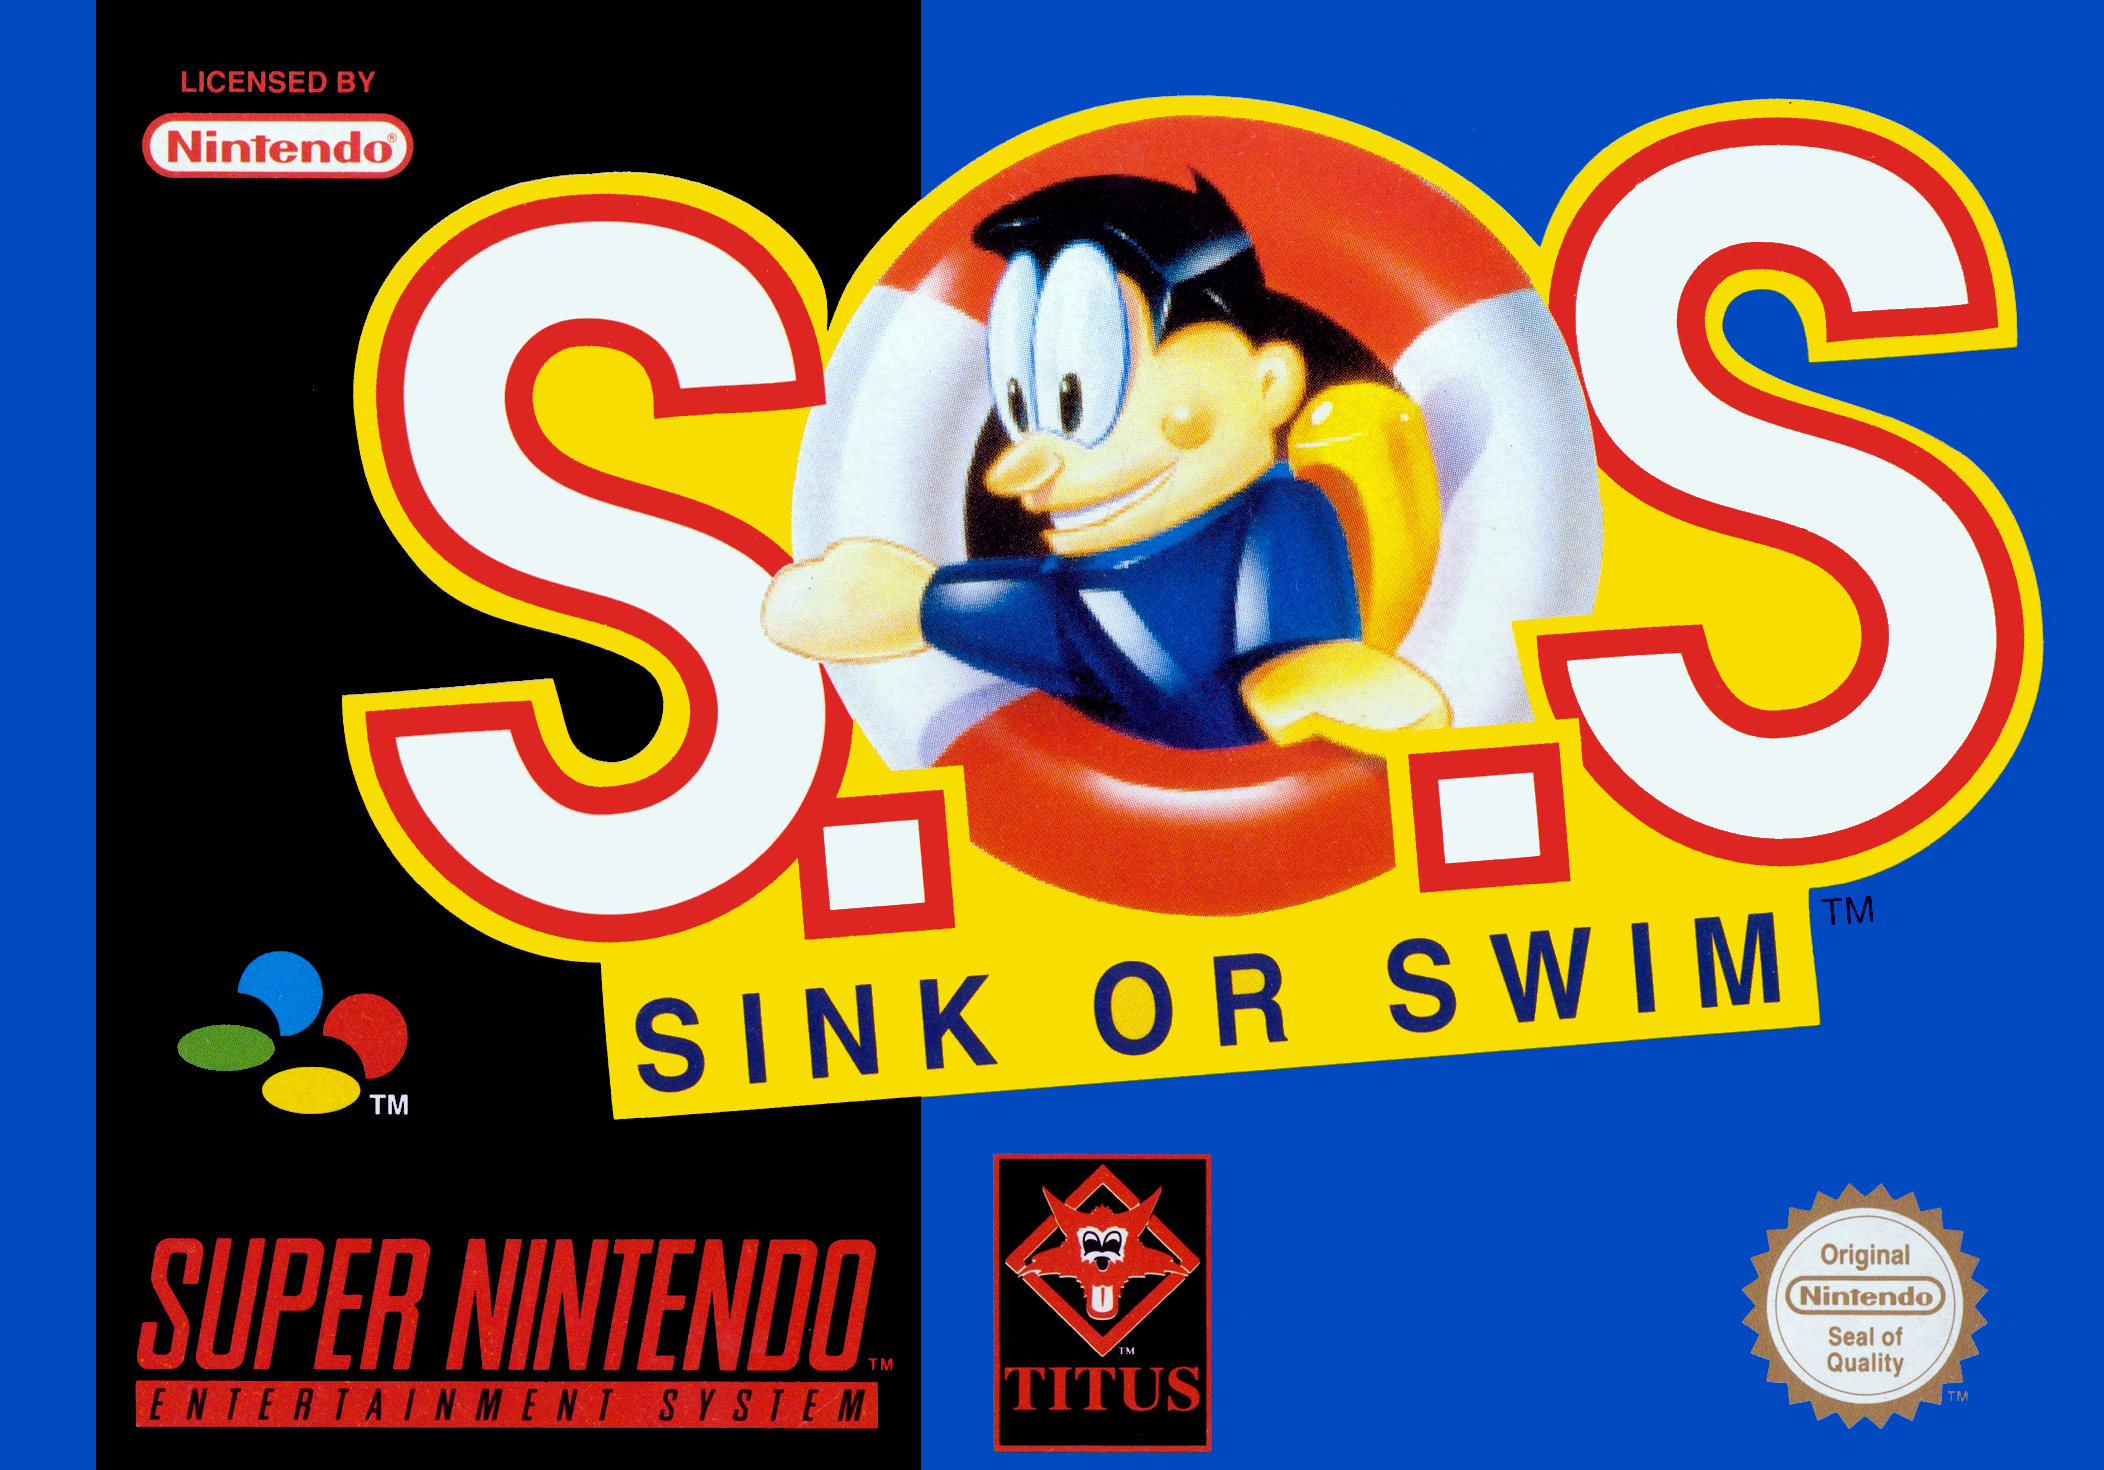 Game | Super Nintendo SNES | S.O.S: Sink Or Swim